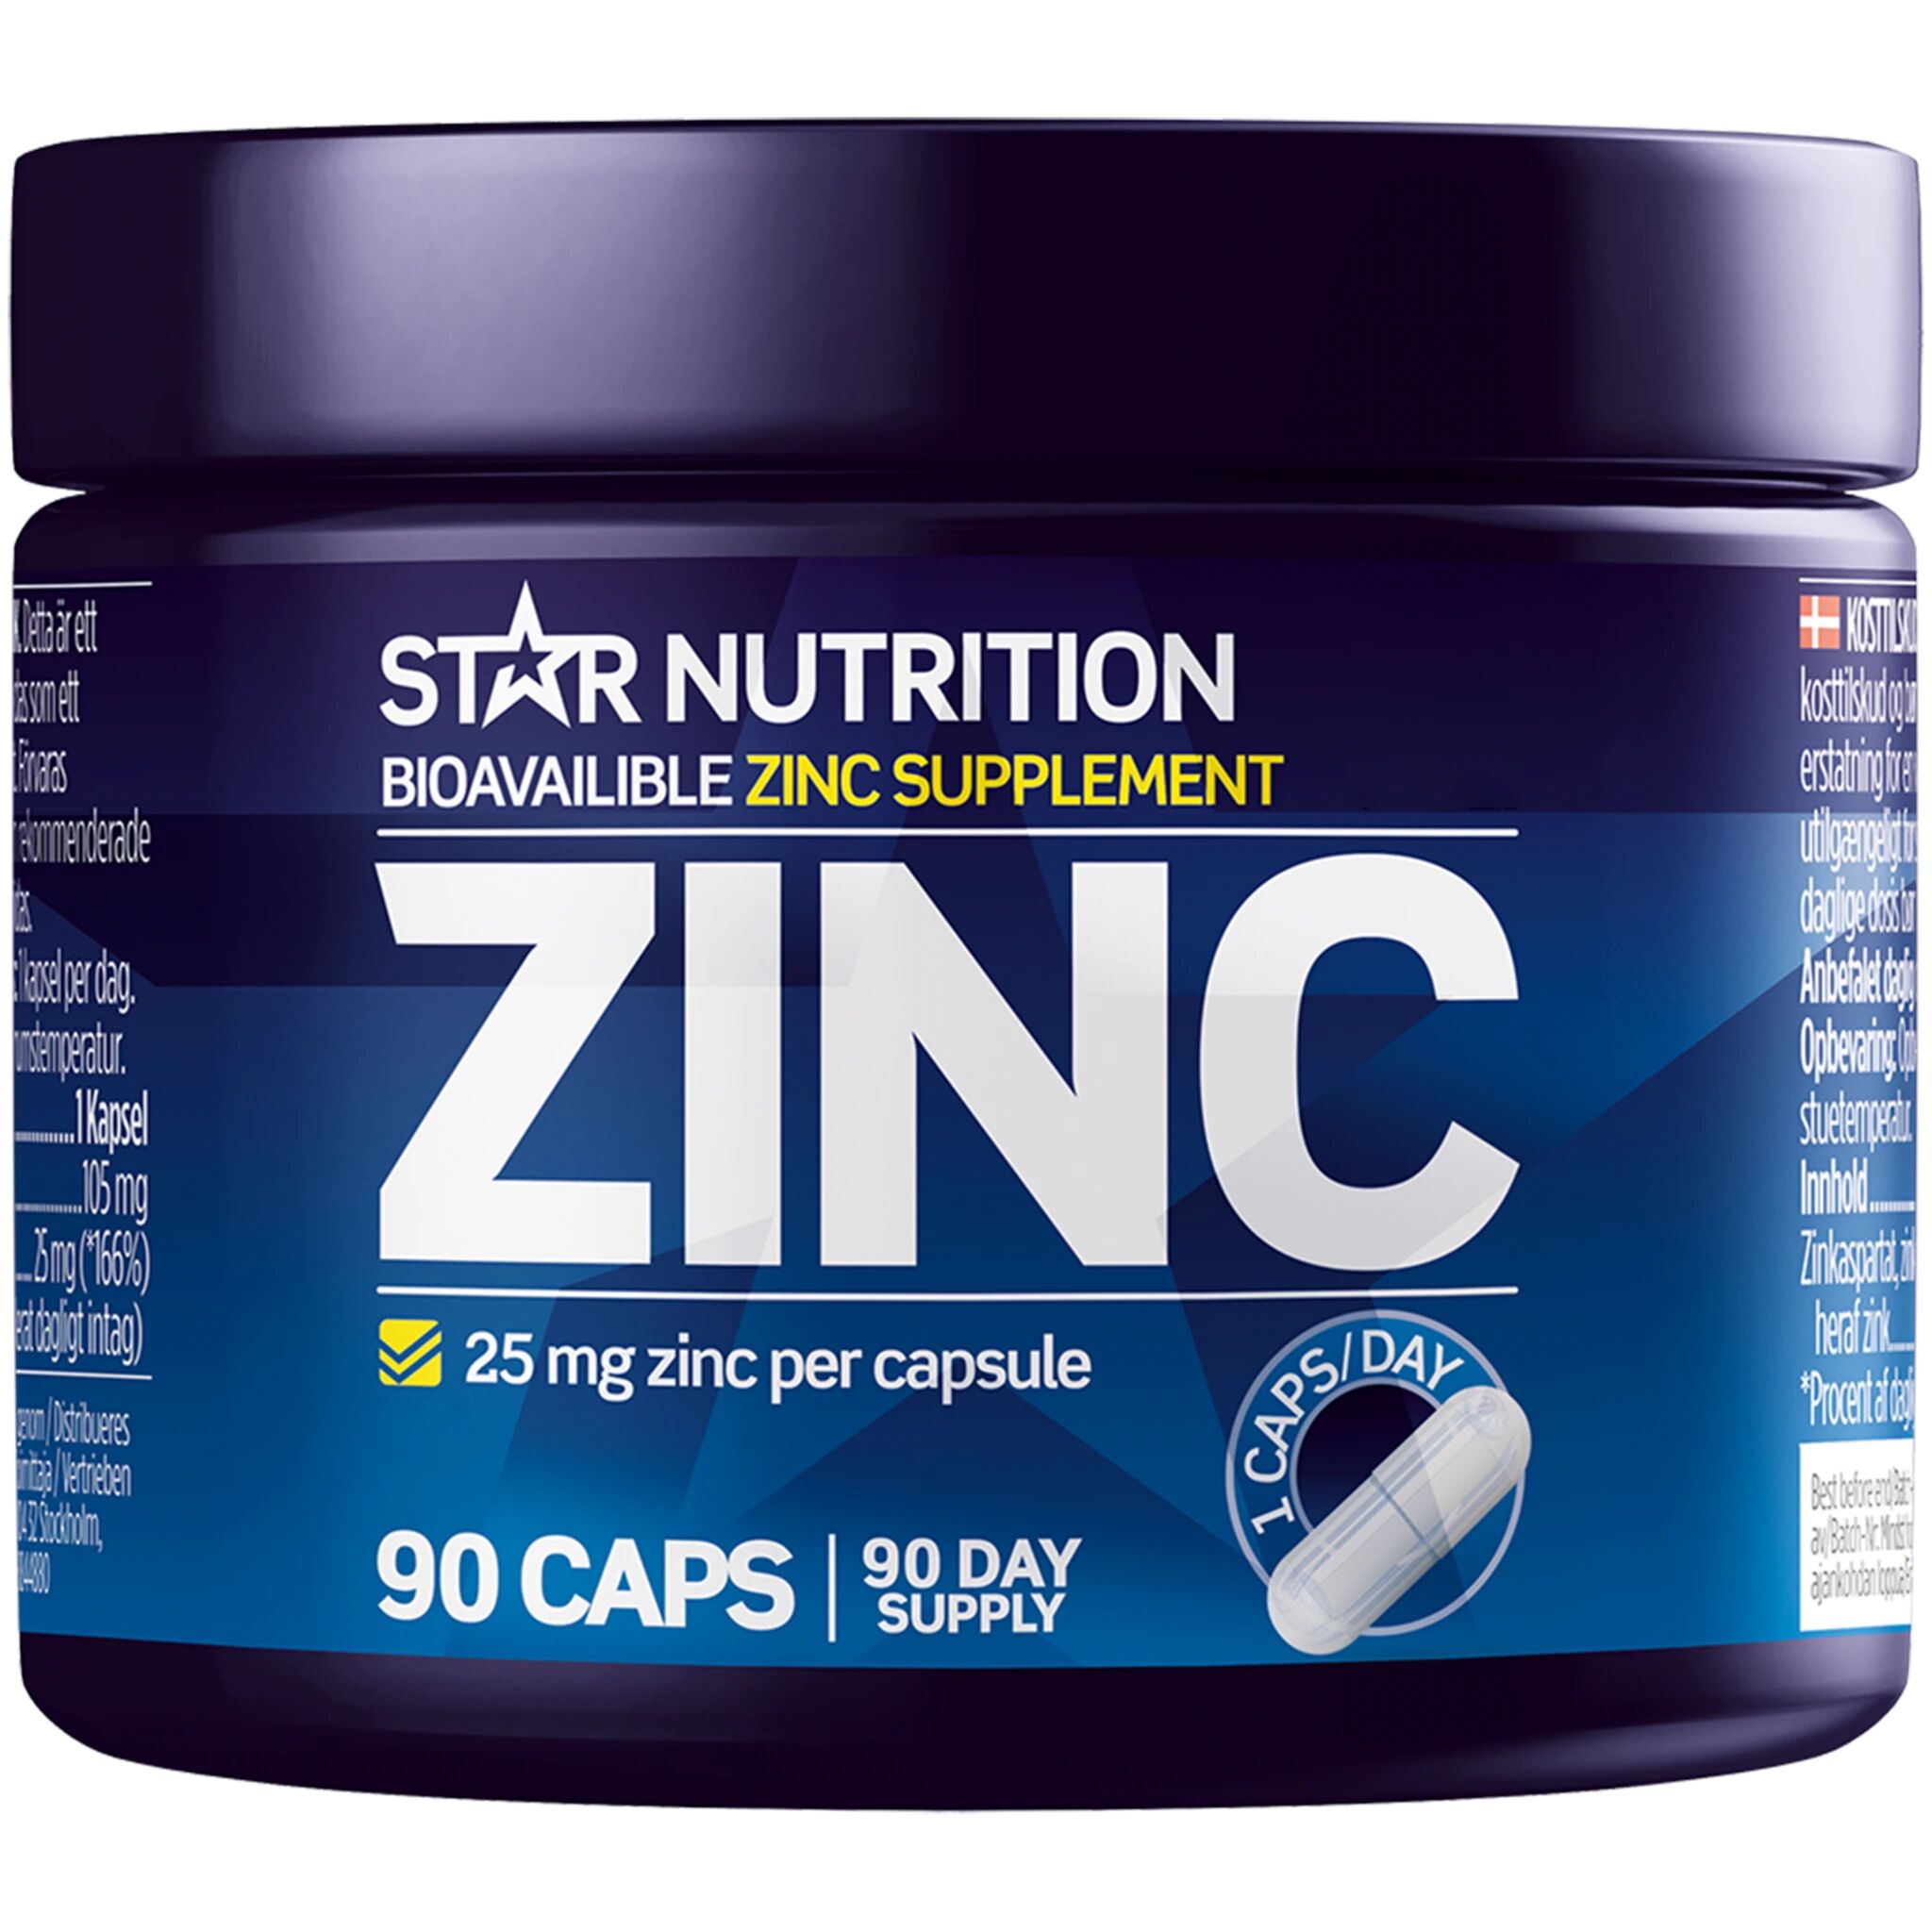 Star Nutrition - Zinc, 25 Mg, 90 Caps, kostilskudd 90caps STD